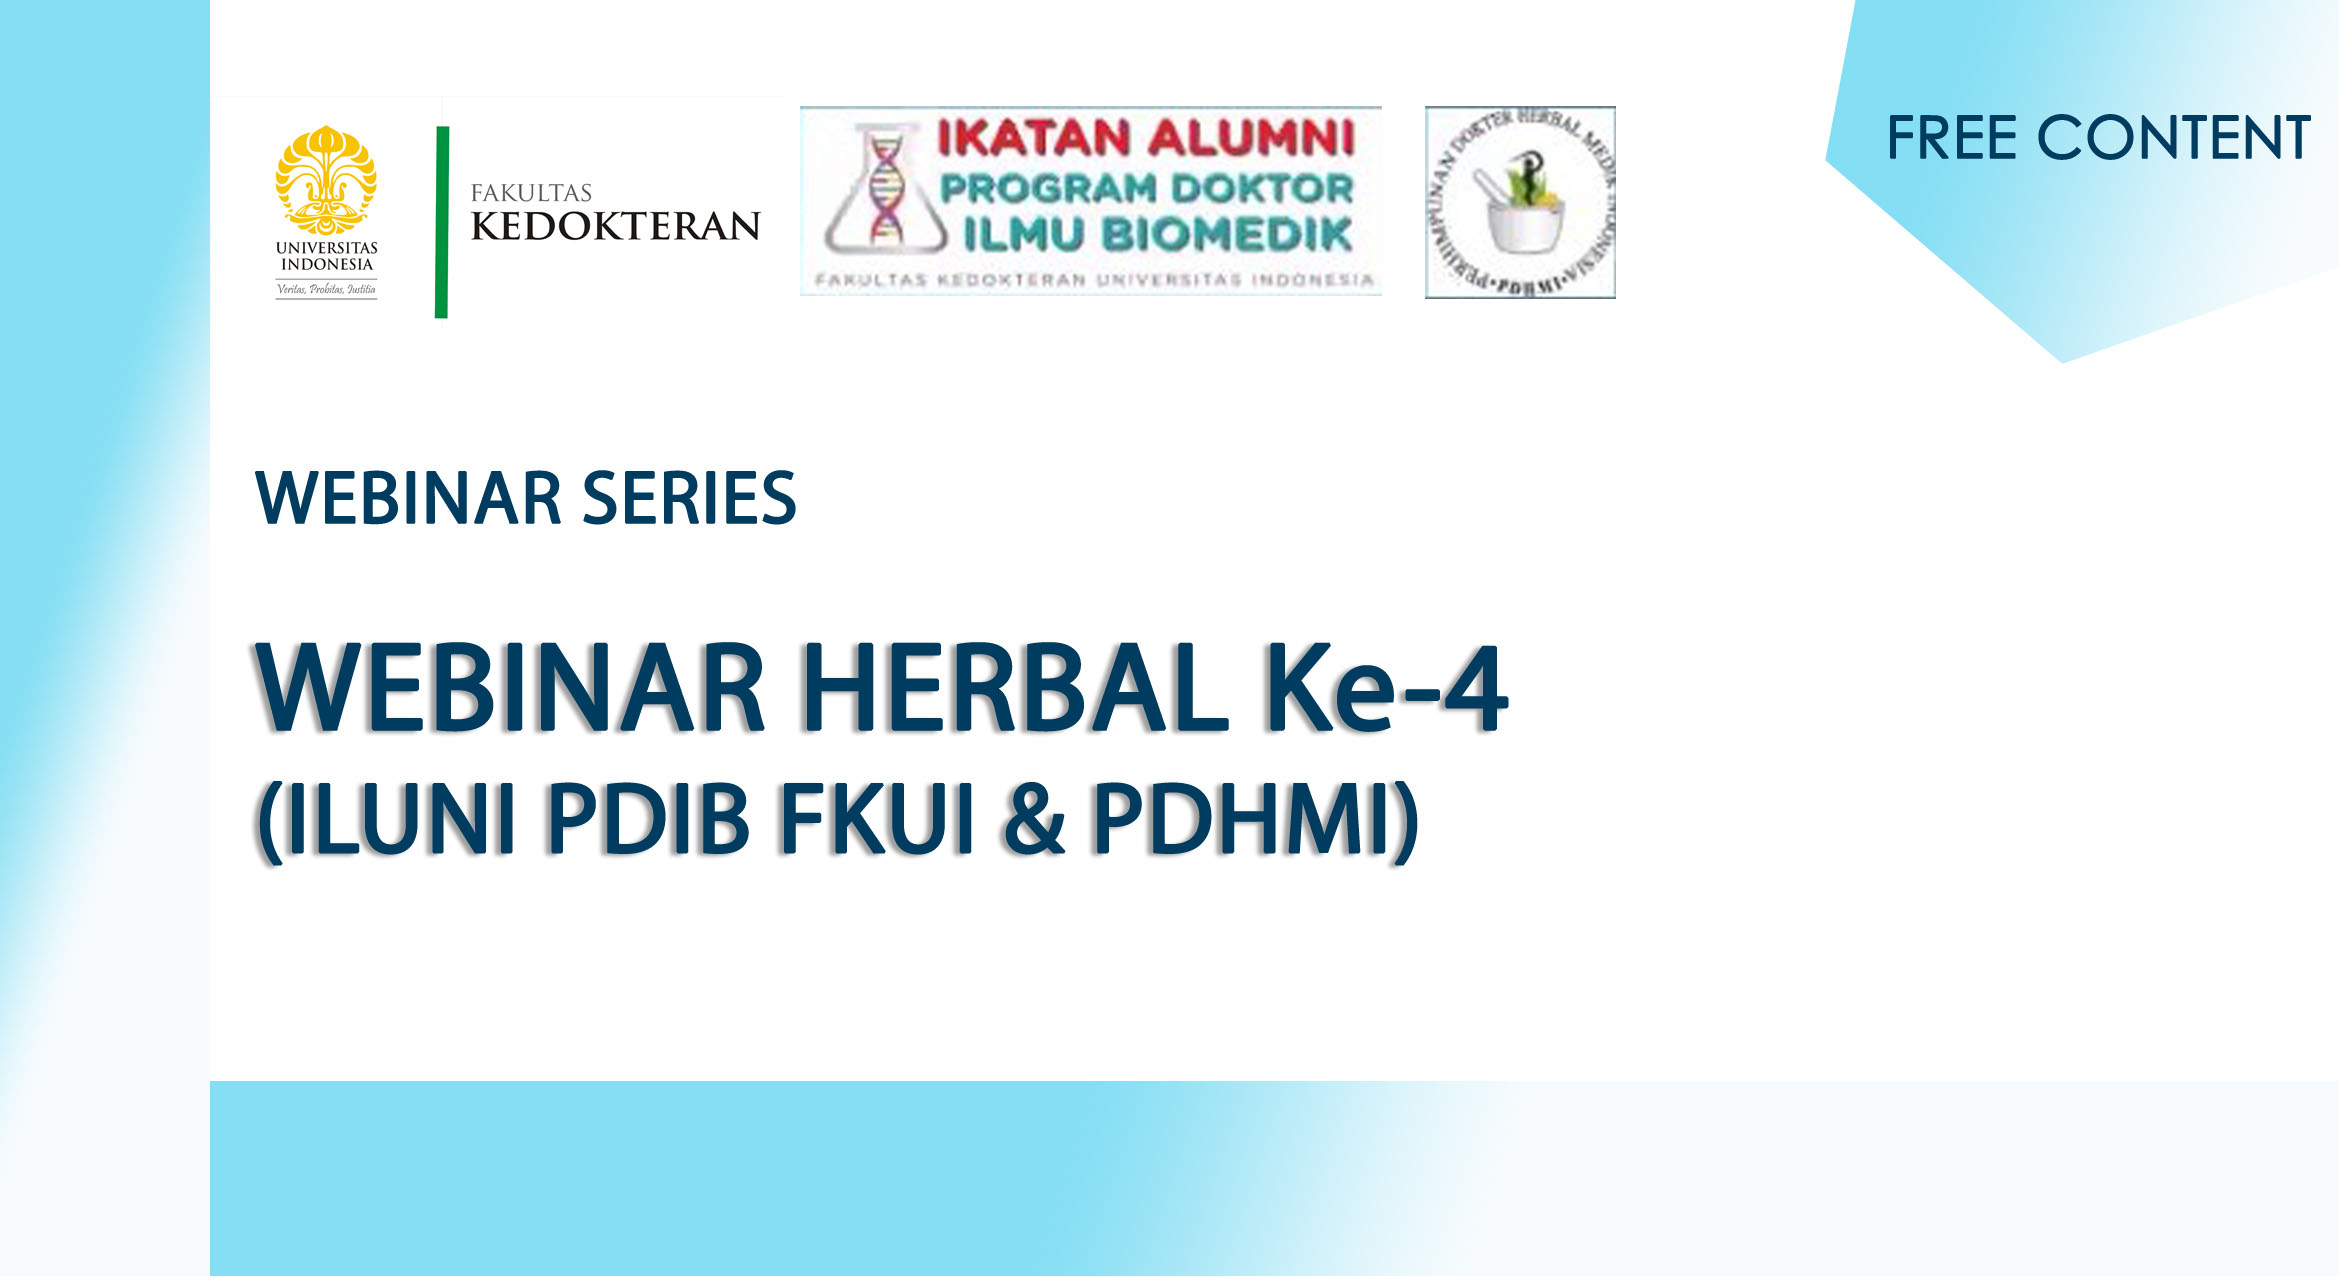 Course Image Webinar Herbal Series Ke-4 ILUNI PDIB & PDHMI Special Update COVID-19